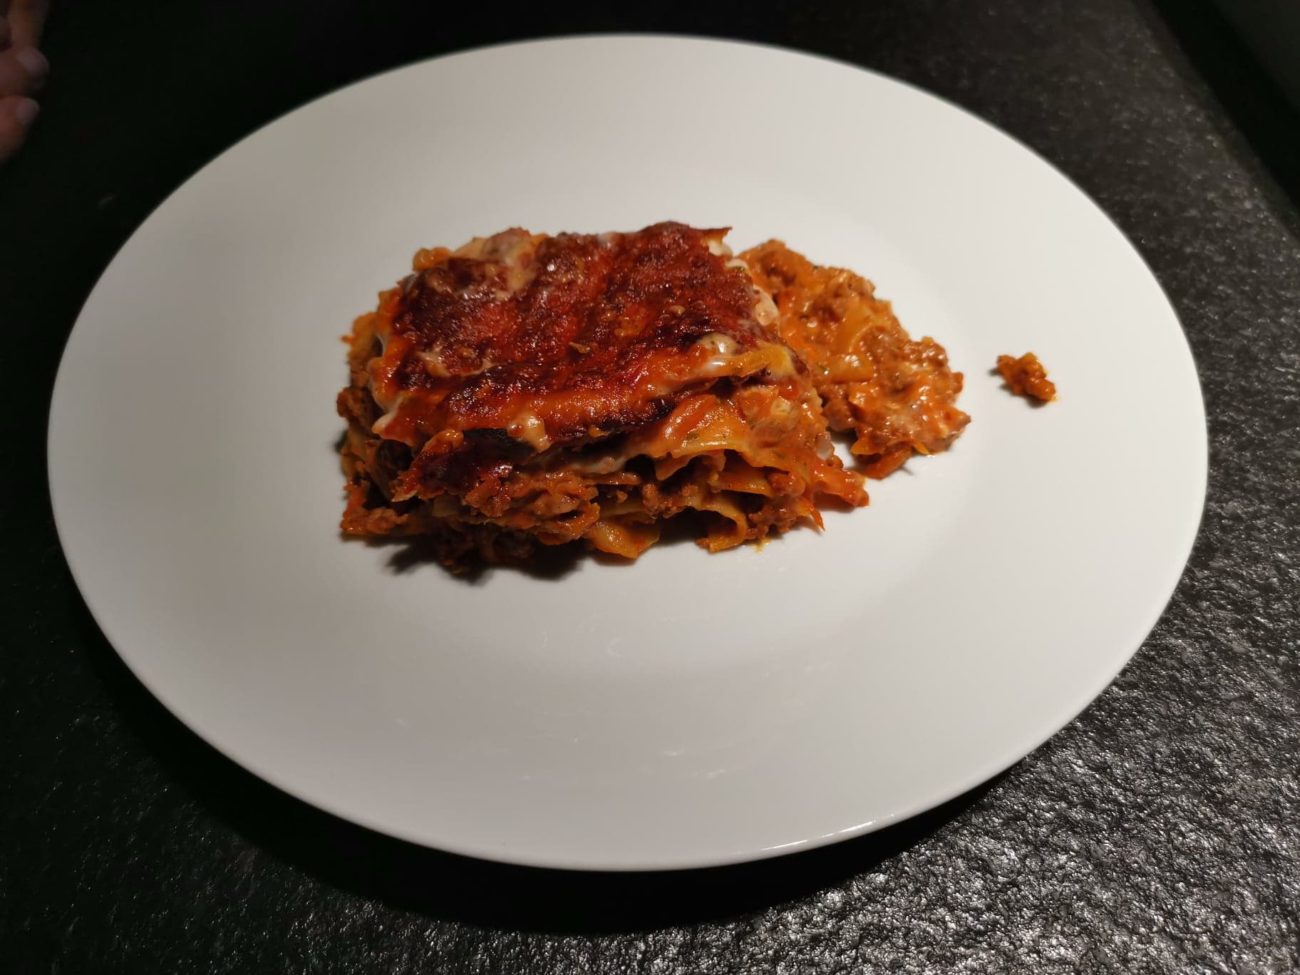 Hjemmelavet lasagne